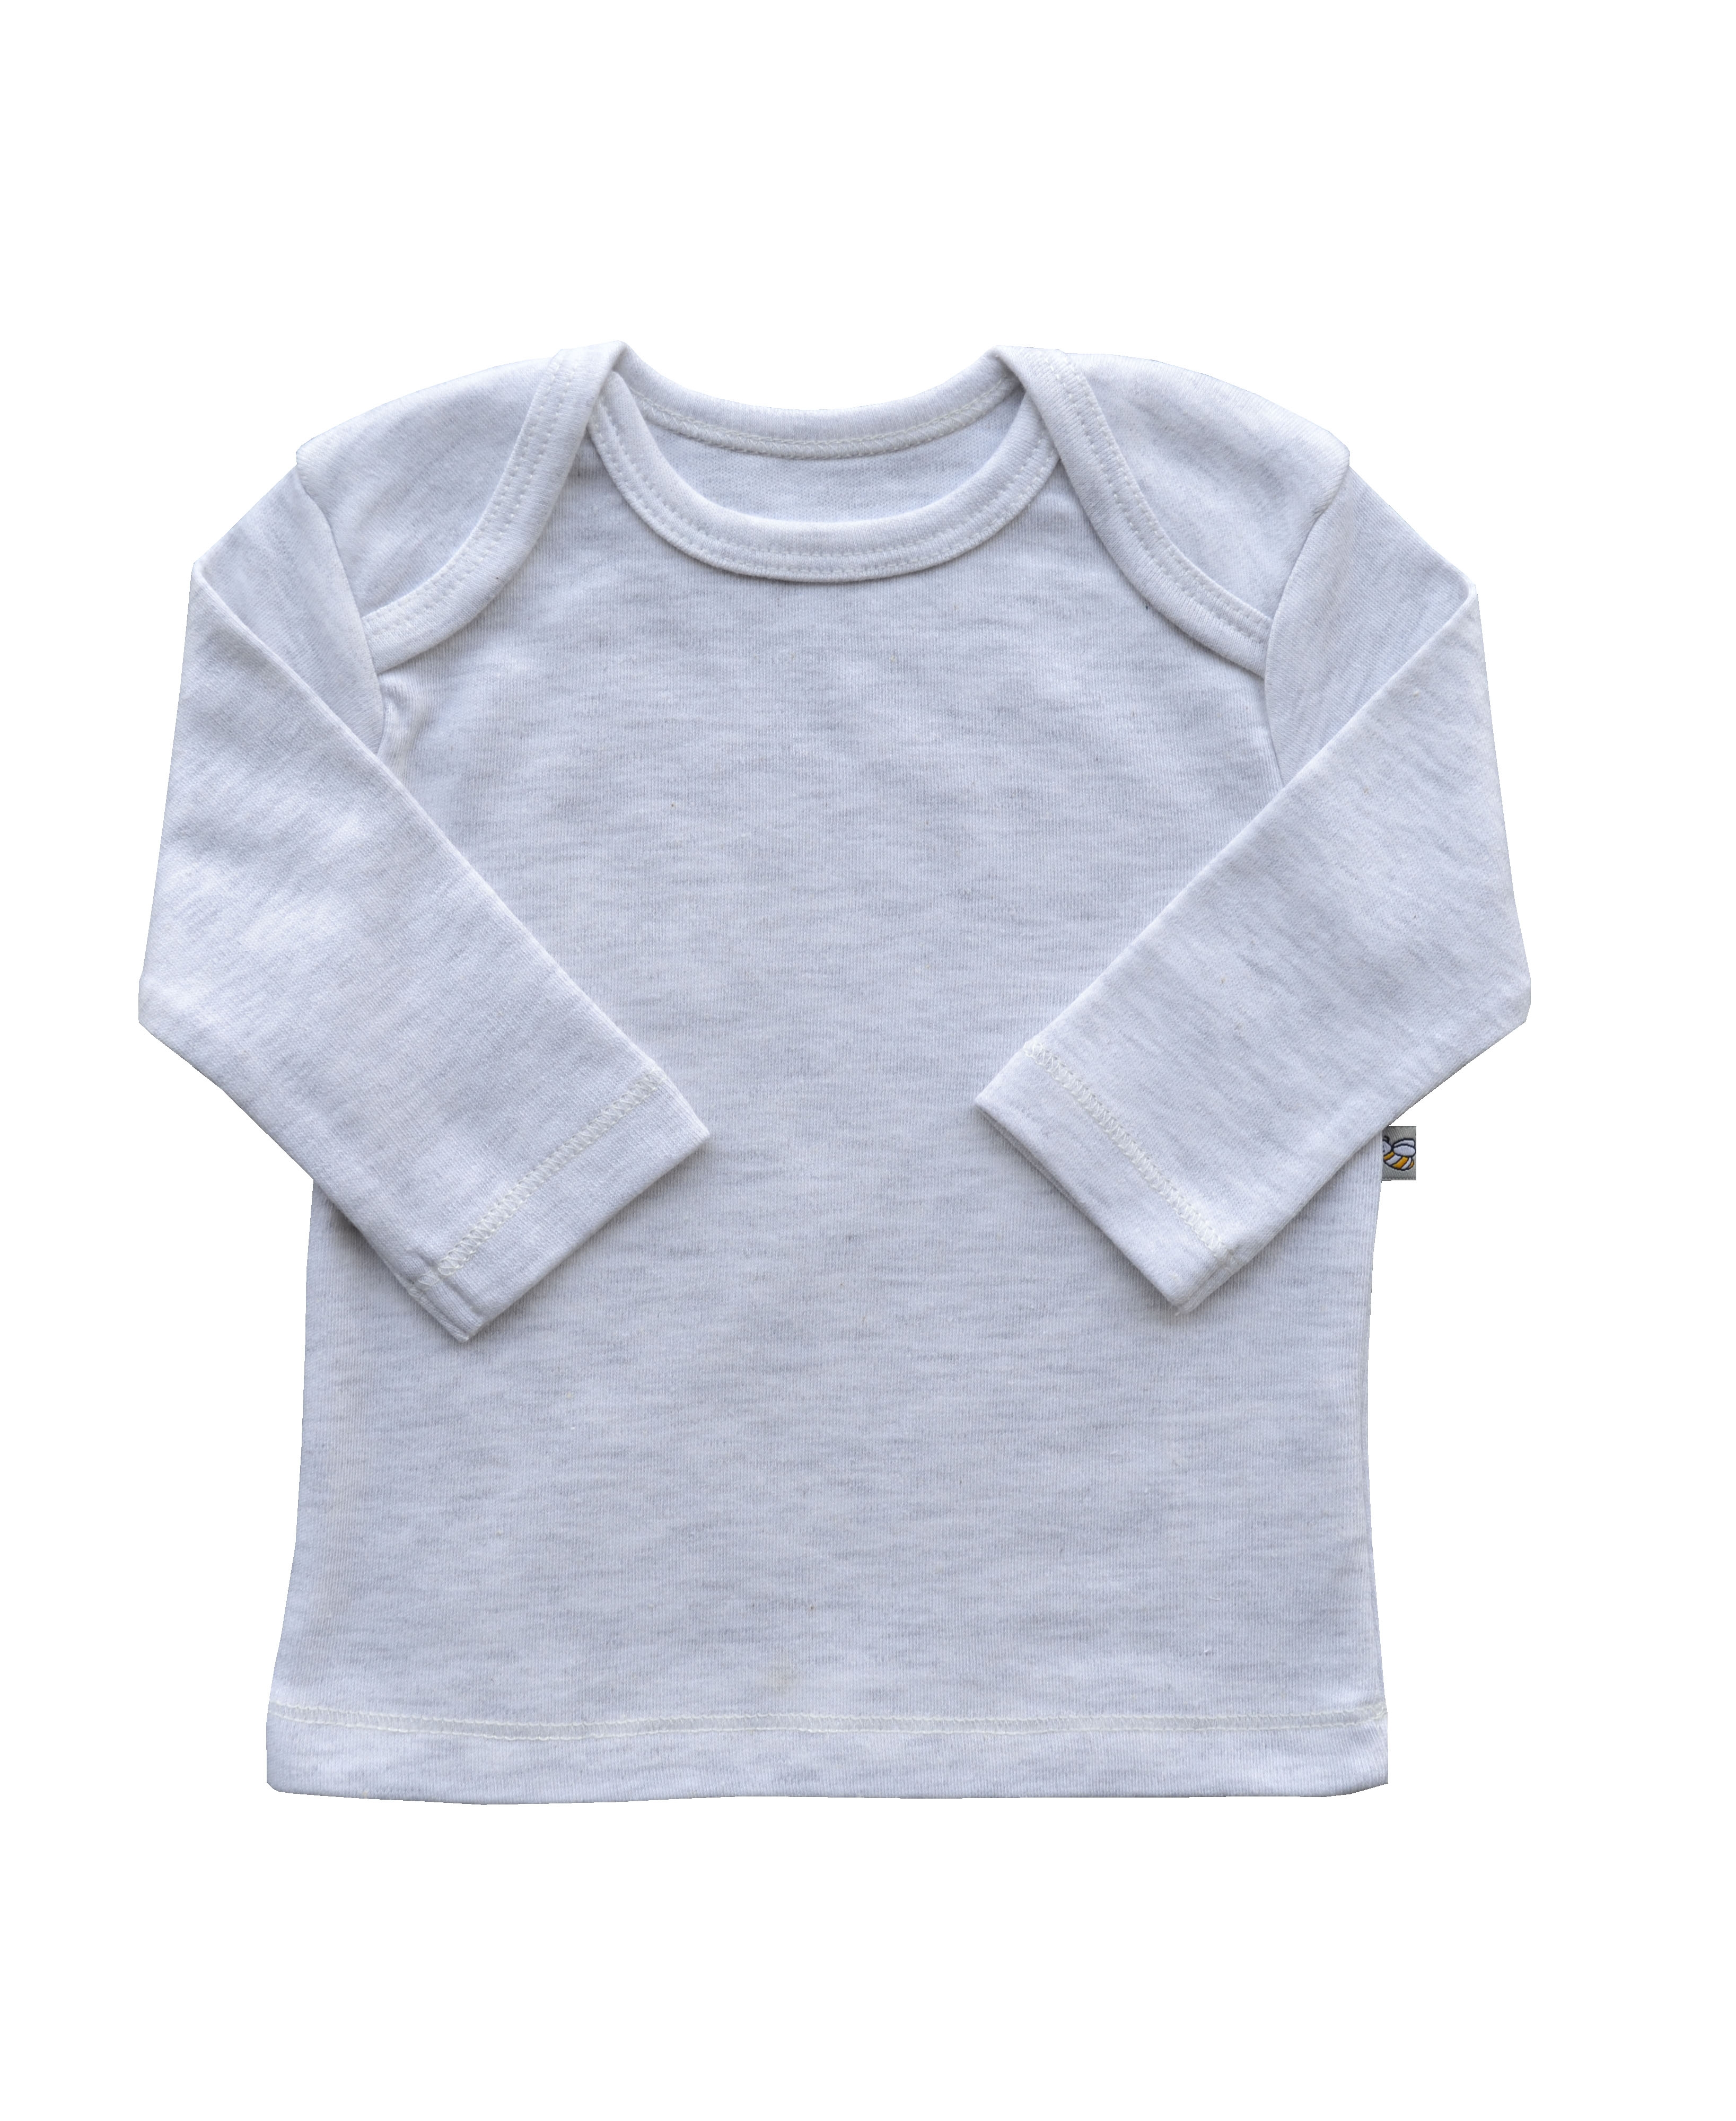 Grey Long Sleeve Top (100% Cotton Interlock Biowash)